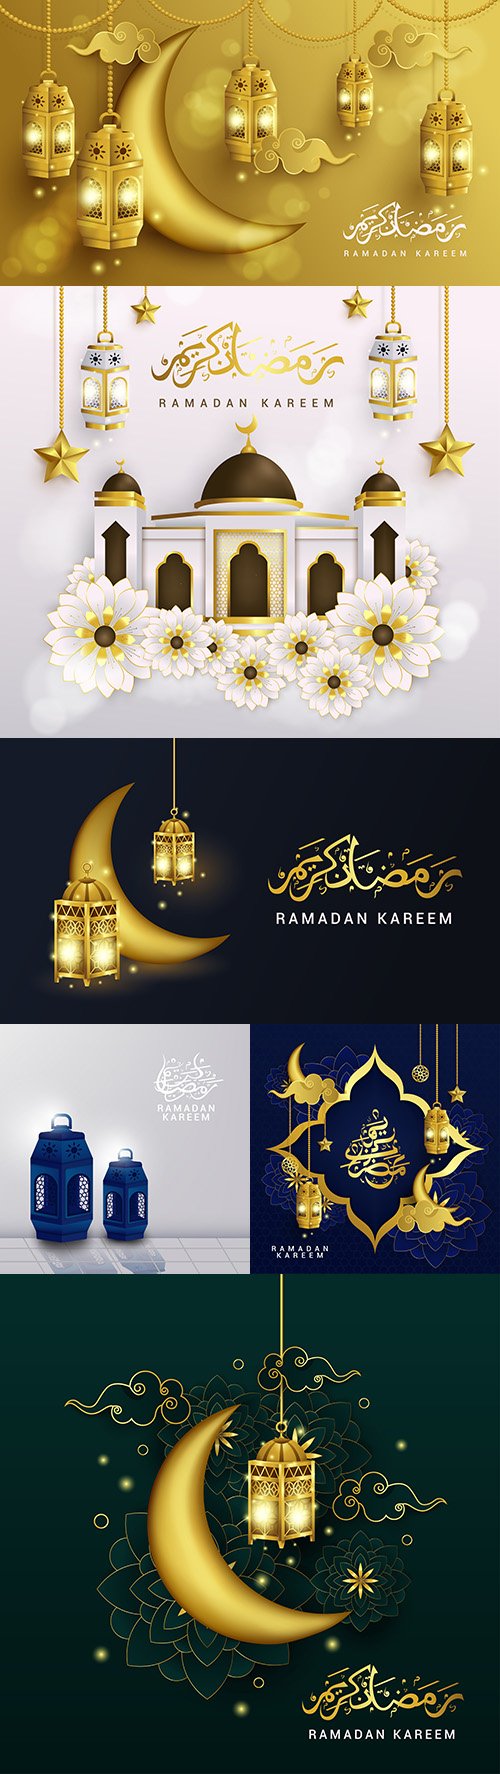 Luxury Ramadan Kareem banner design illustrations